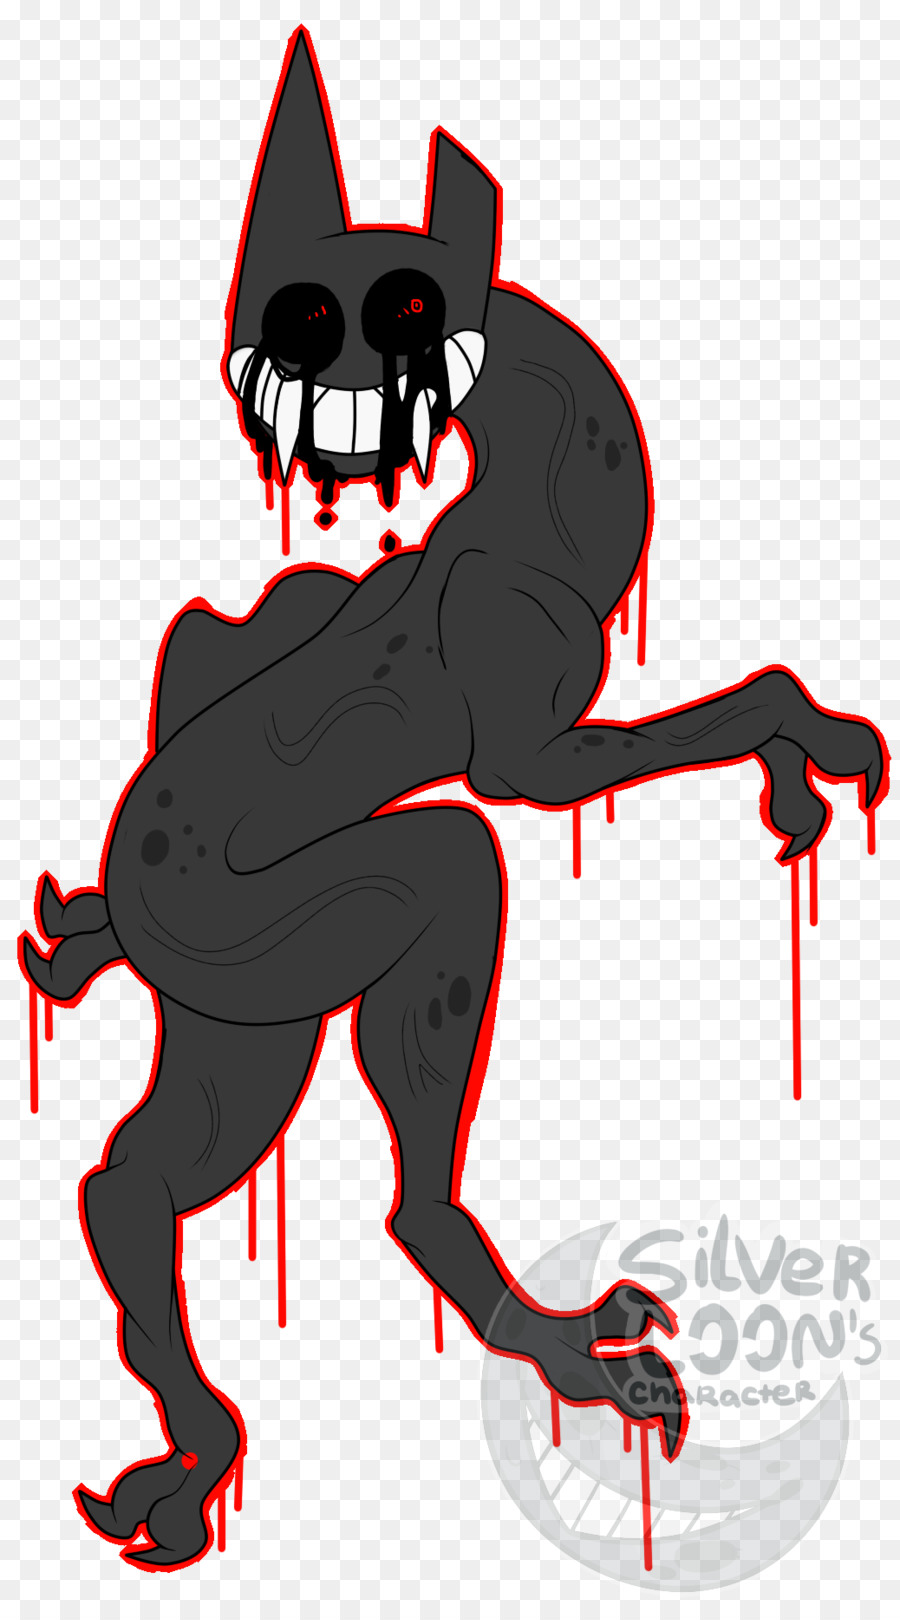 Clip art Black Silhouette Cartoon Legendary creature - creeper guy png download - 1038*1851 - Free Transparent Black png Download.